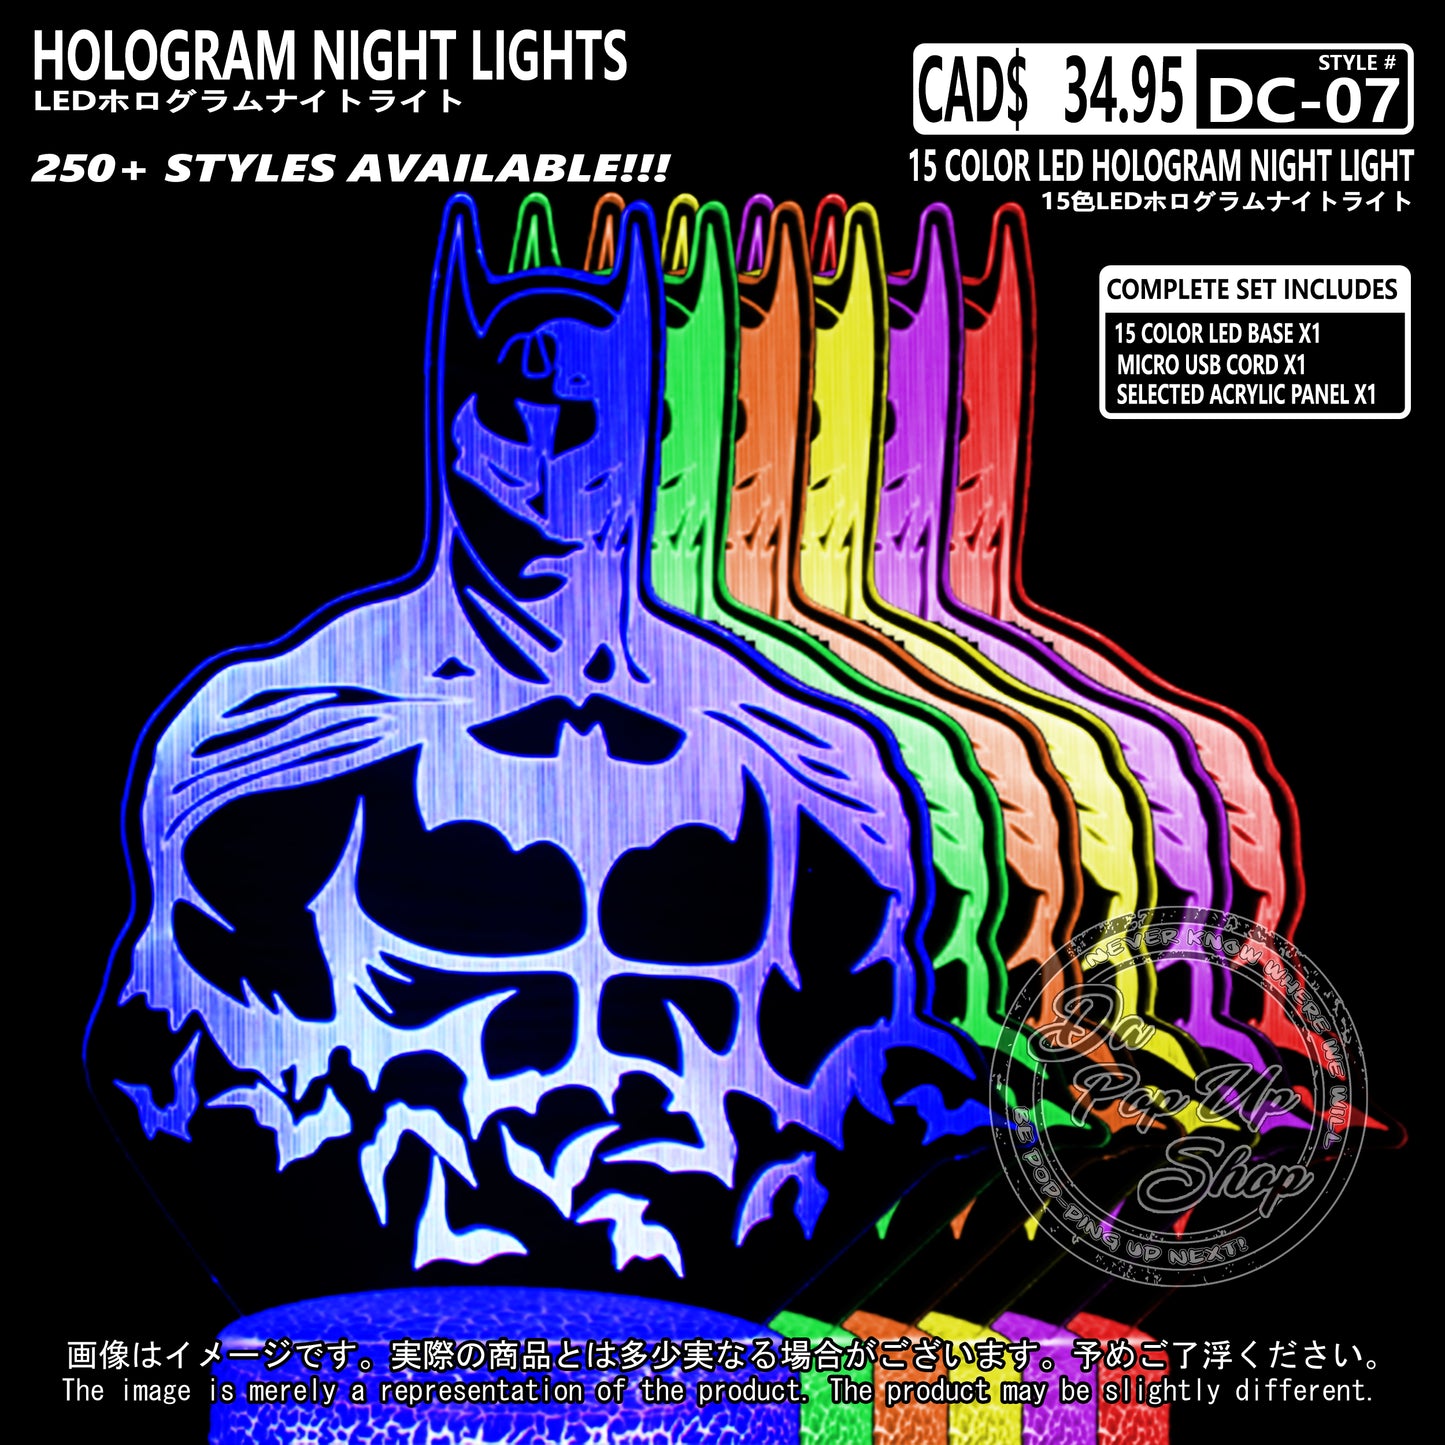 (DC-07) DC Hologram LED Night Light